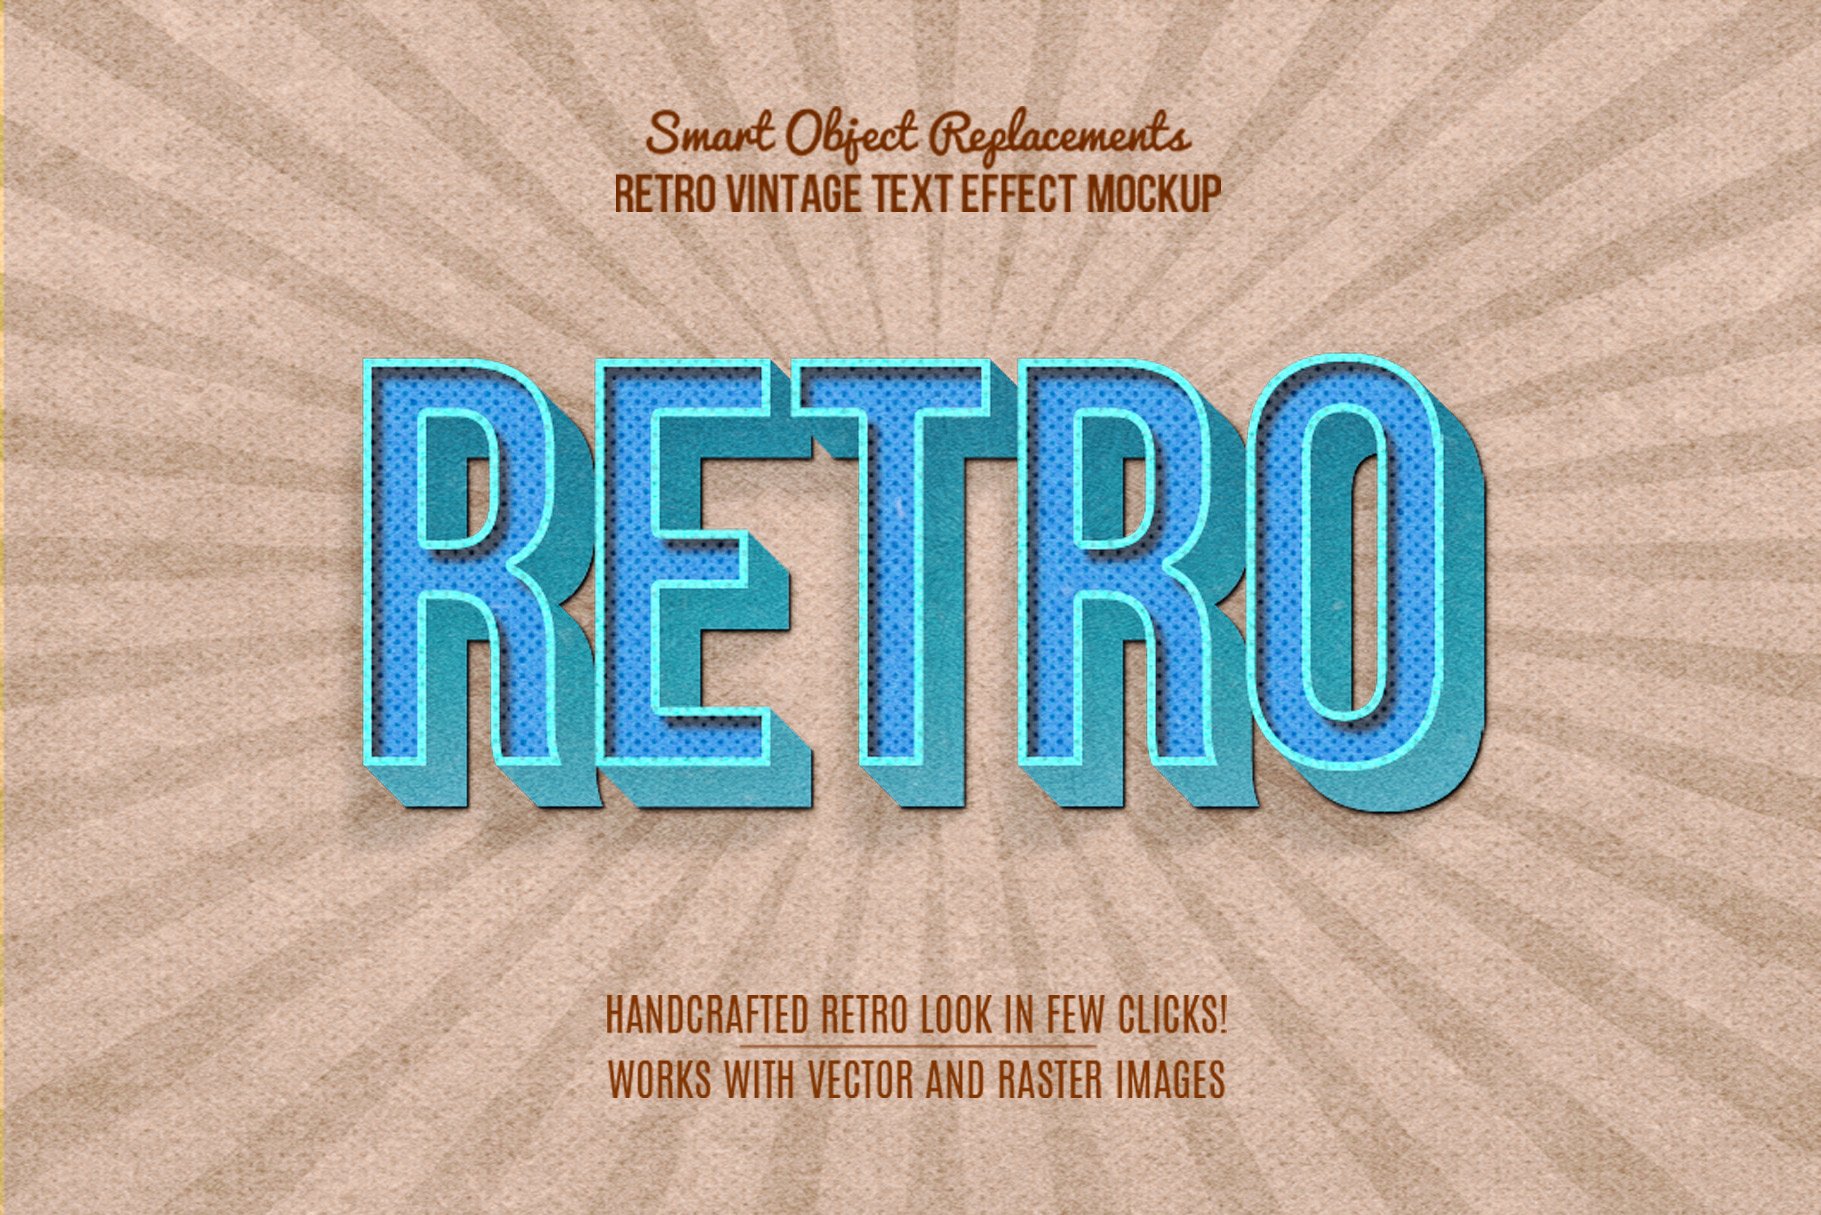 10 Retro Vintage Text Effectpreview image.